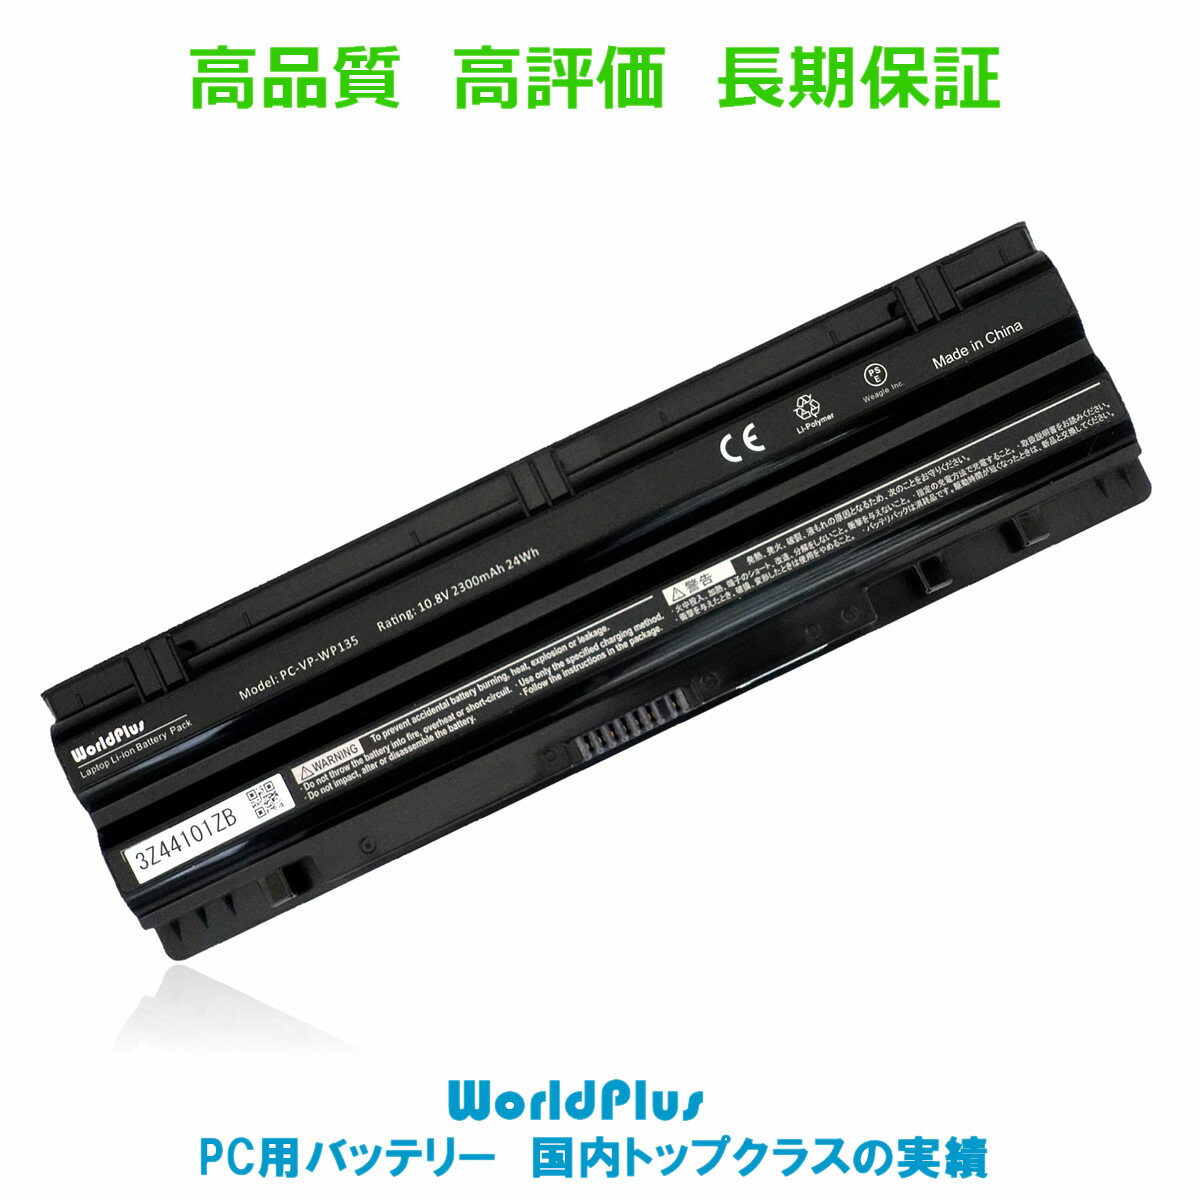 WorldPlus 互換バッテリー NEC PC-VP-WP135 交換用 VersaPro J タイプ VL VJ25L VJ26T / VX VJ18E VJ25L VJ27M